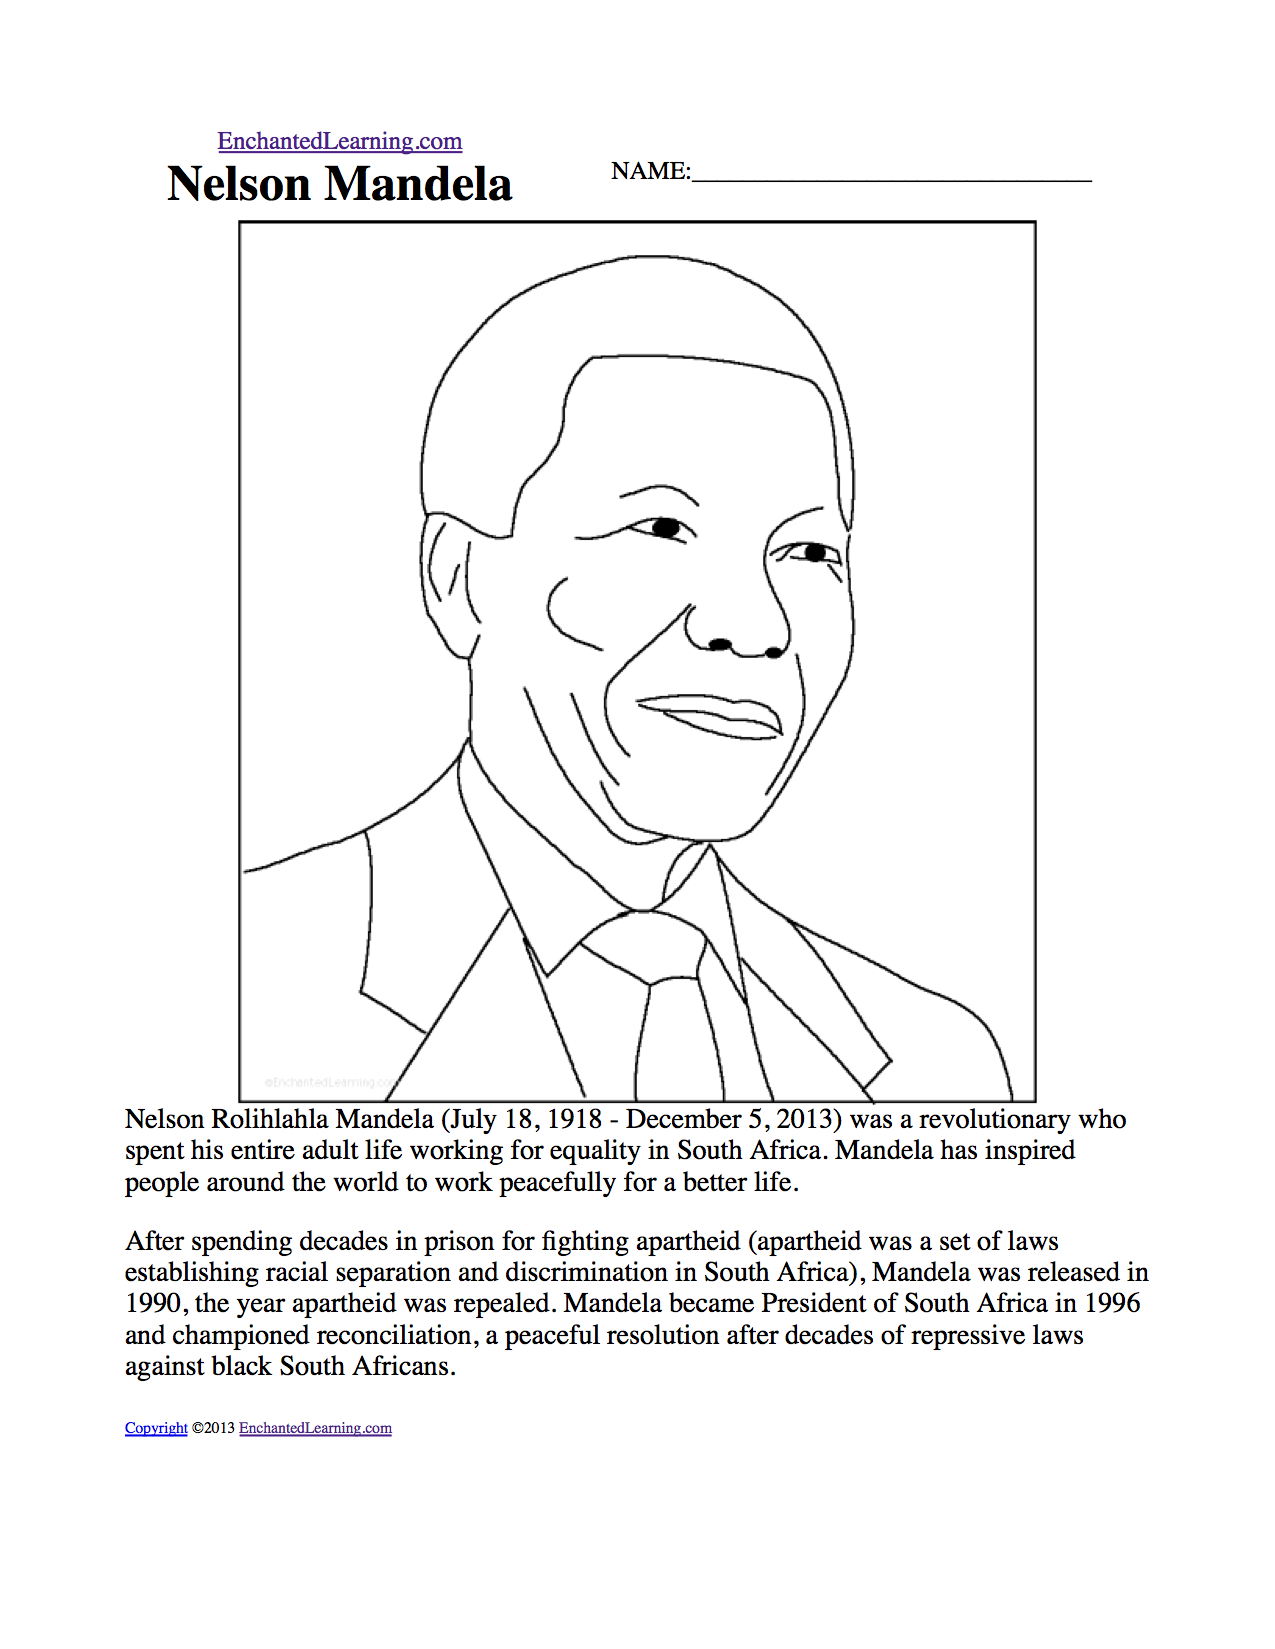 Nelson Mandela printout